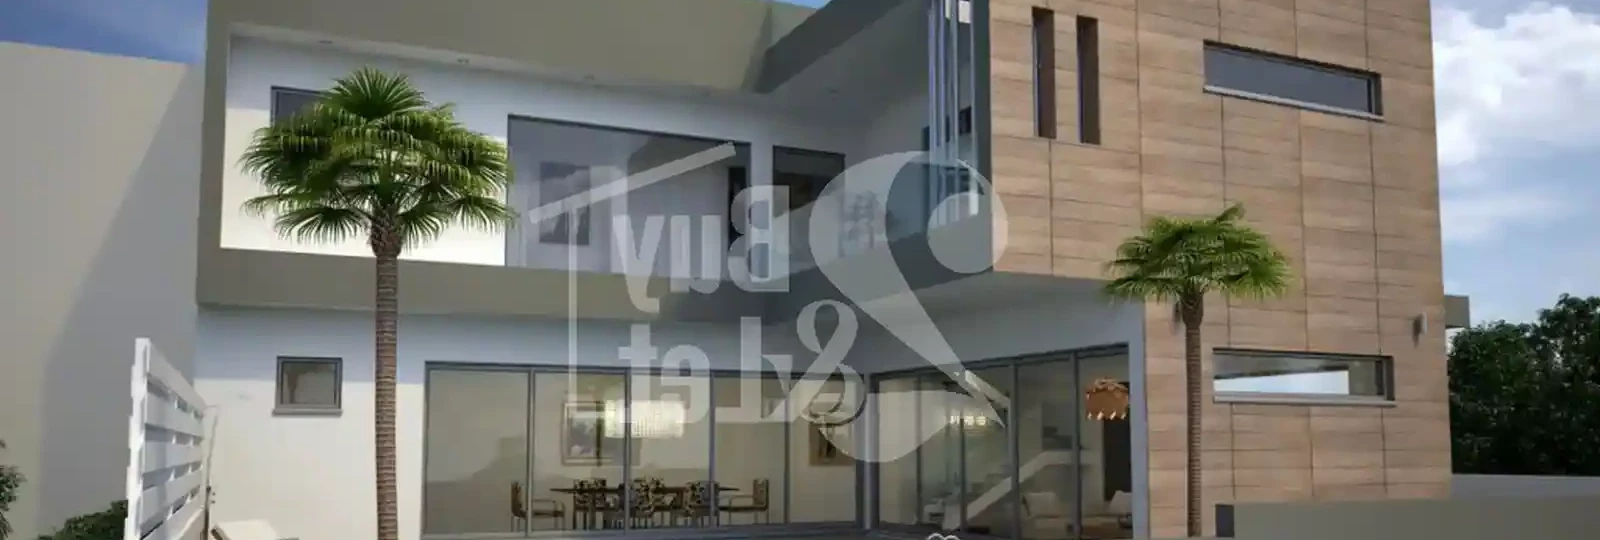 3-bedroom villa fоr sаle €750.000, image 1